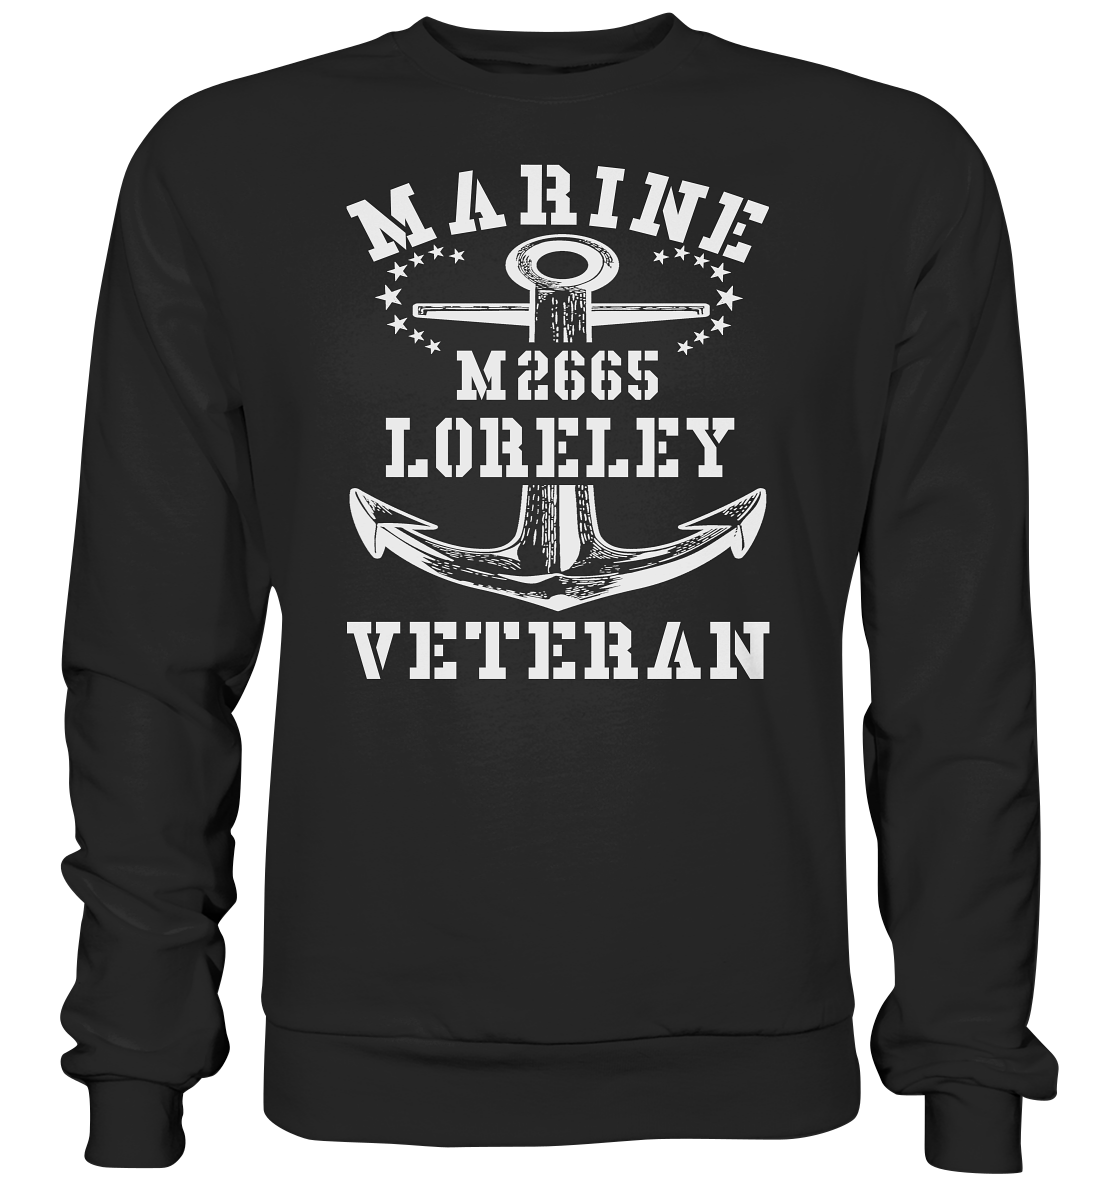 BiMi M2665 LORELEY Marine Veteran - Premium Sweatshirt